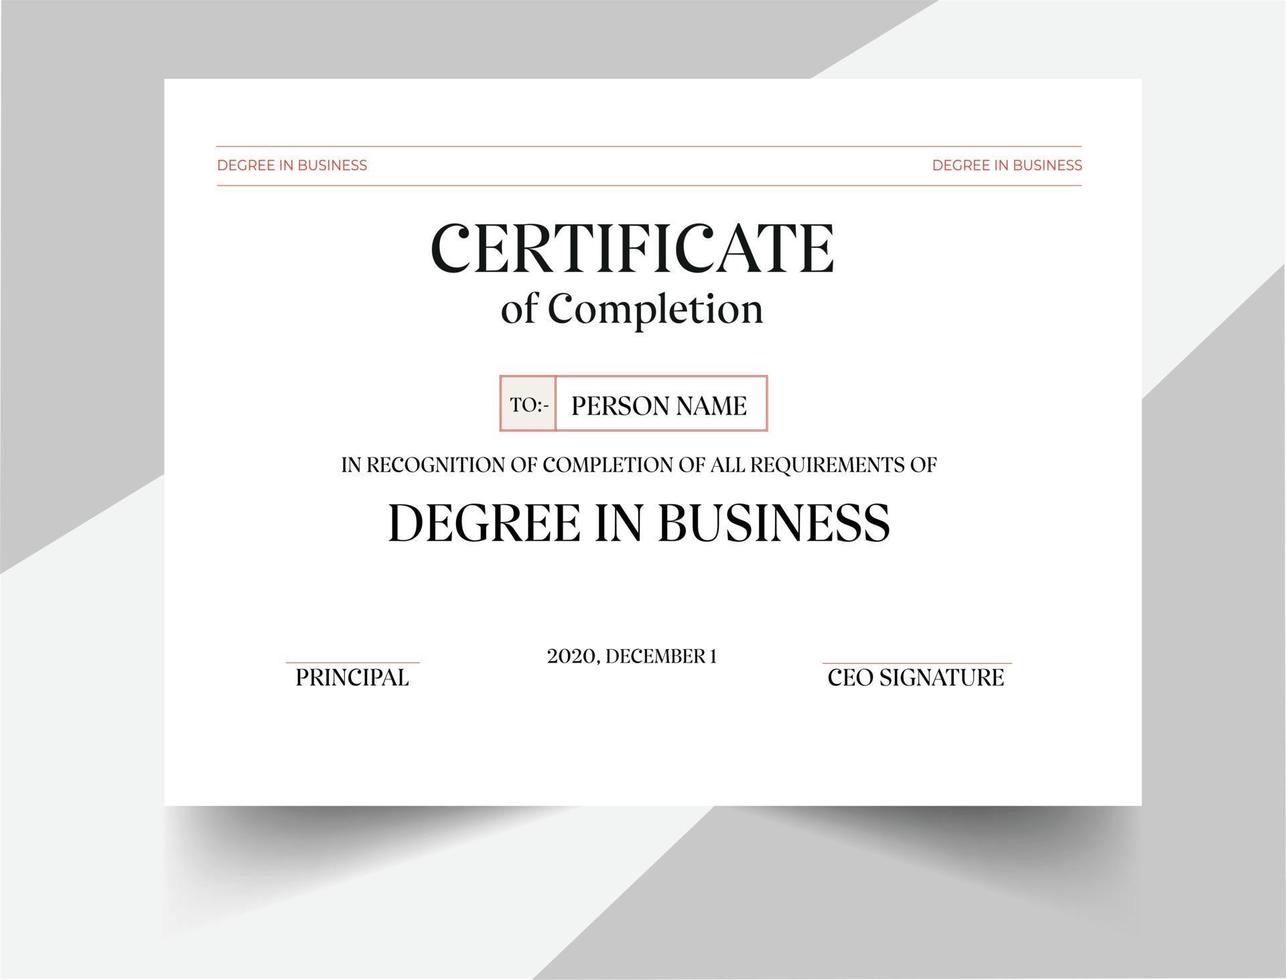 Degree in Business Certificate Design vector